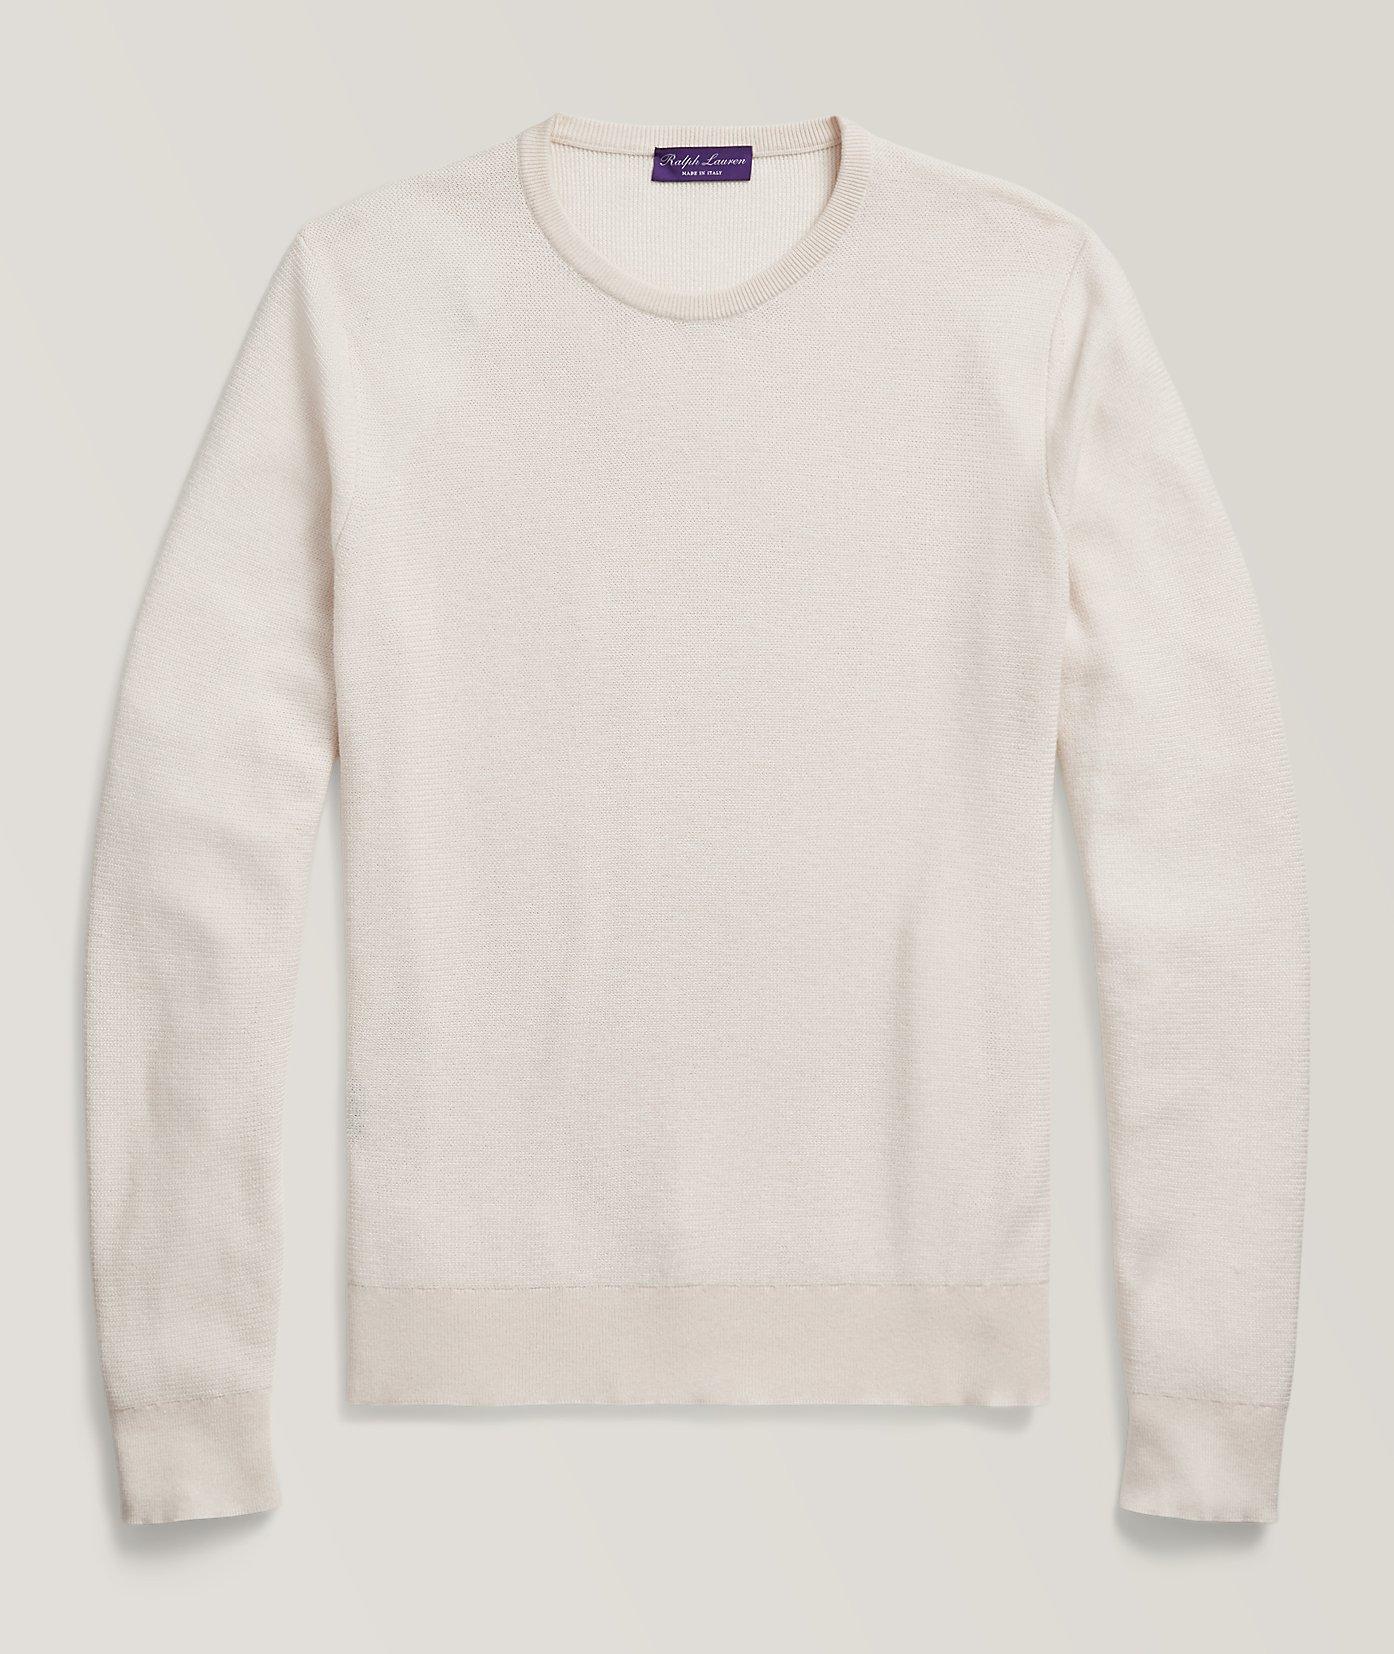 Silk-Cashmere Blend Sweater image 0